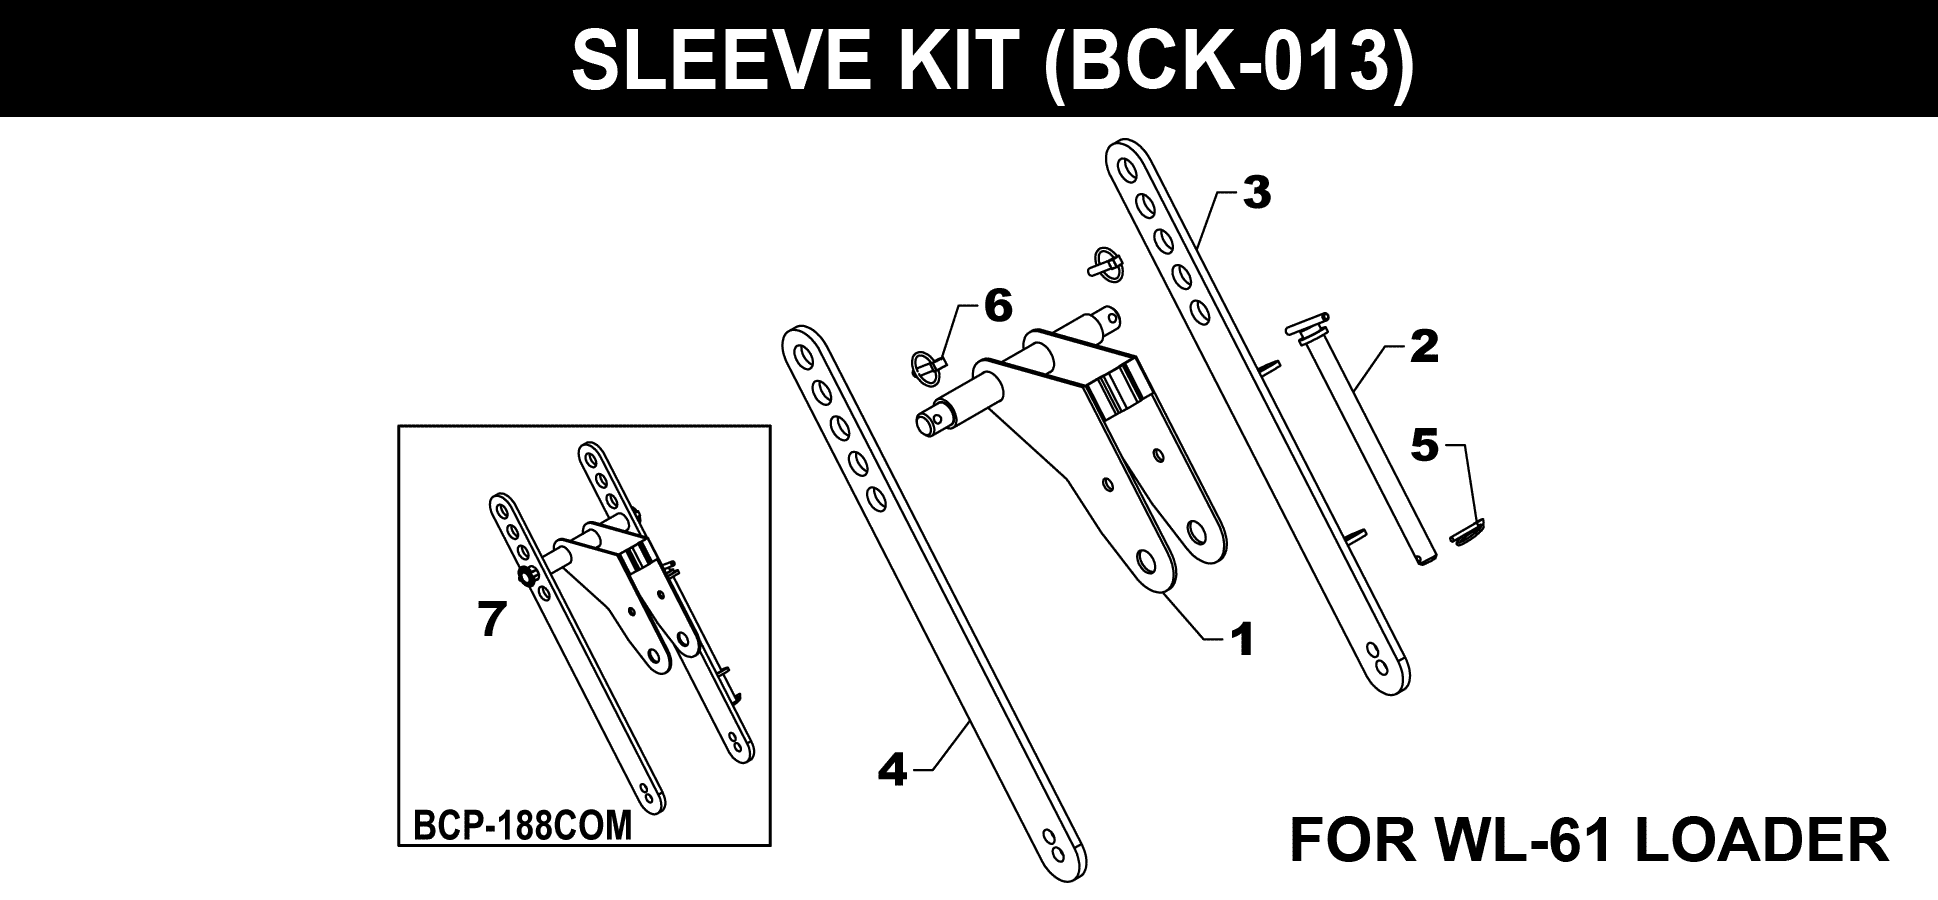 BCK-013 Sleeve Kit